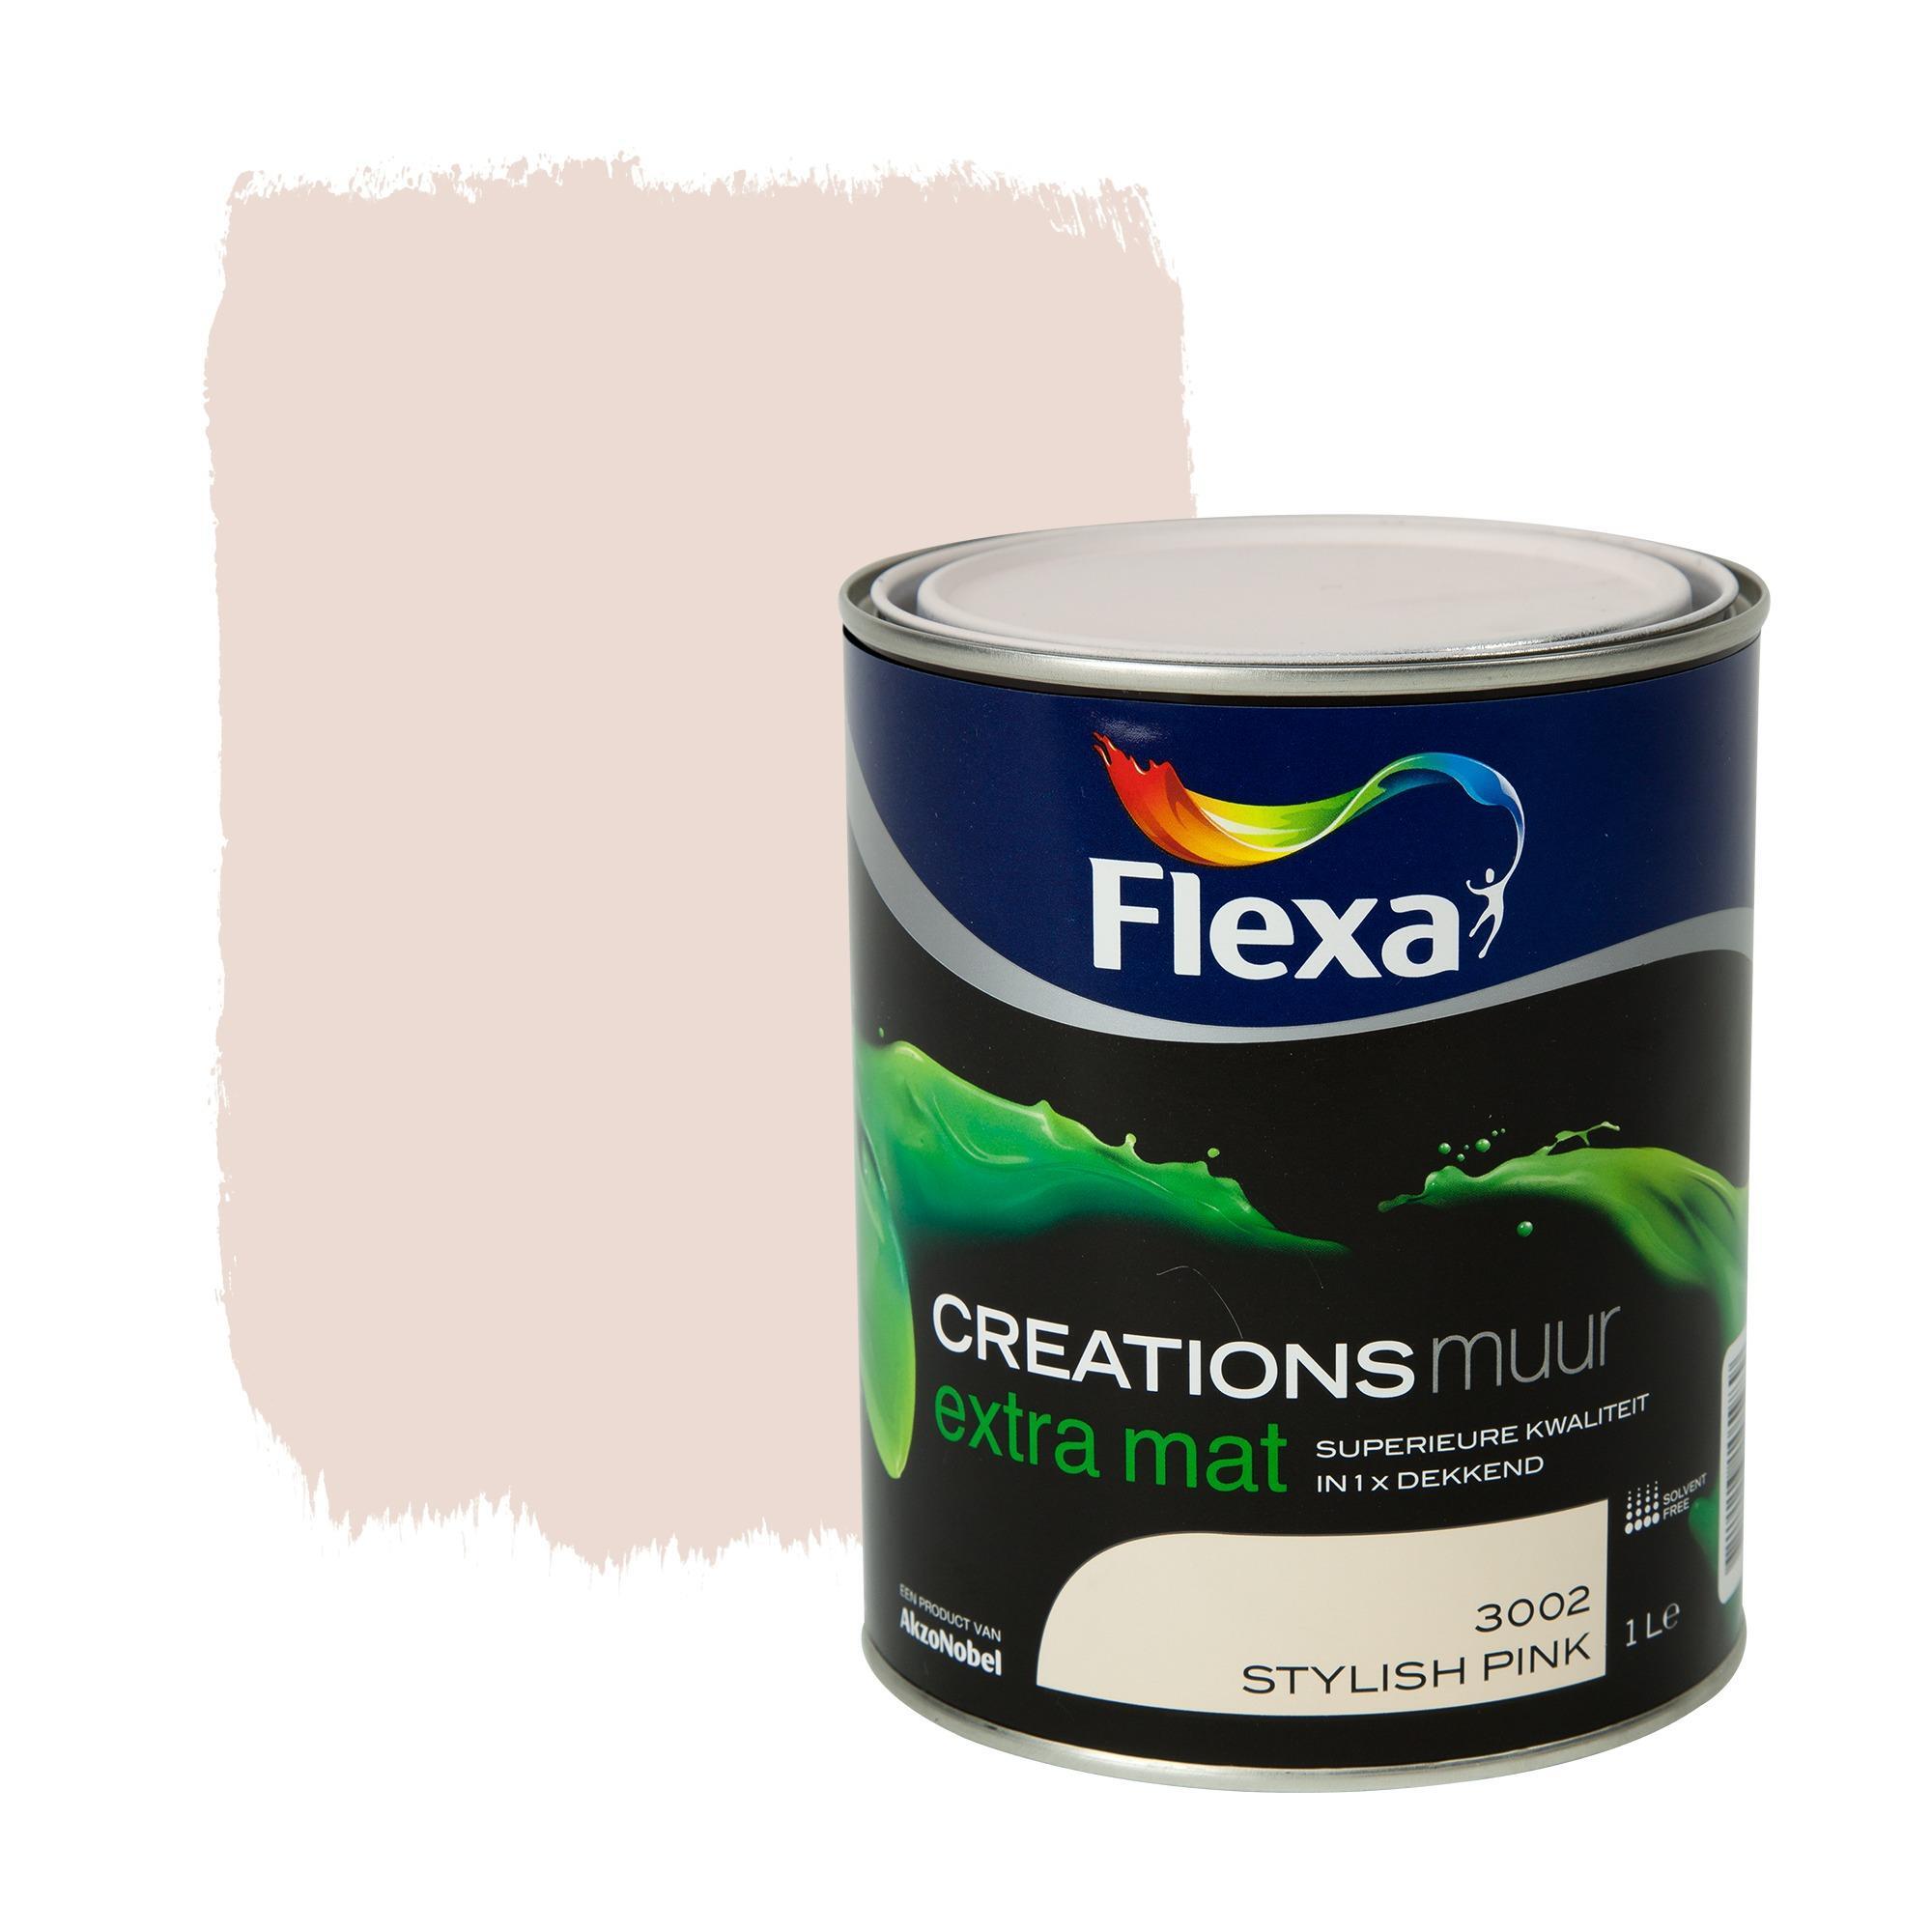 FLEXA Creations muurverf stylish pink extra mat 1 liter